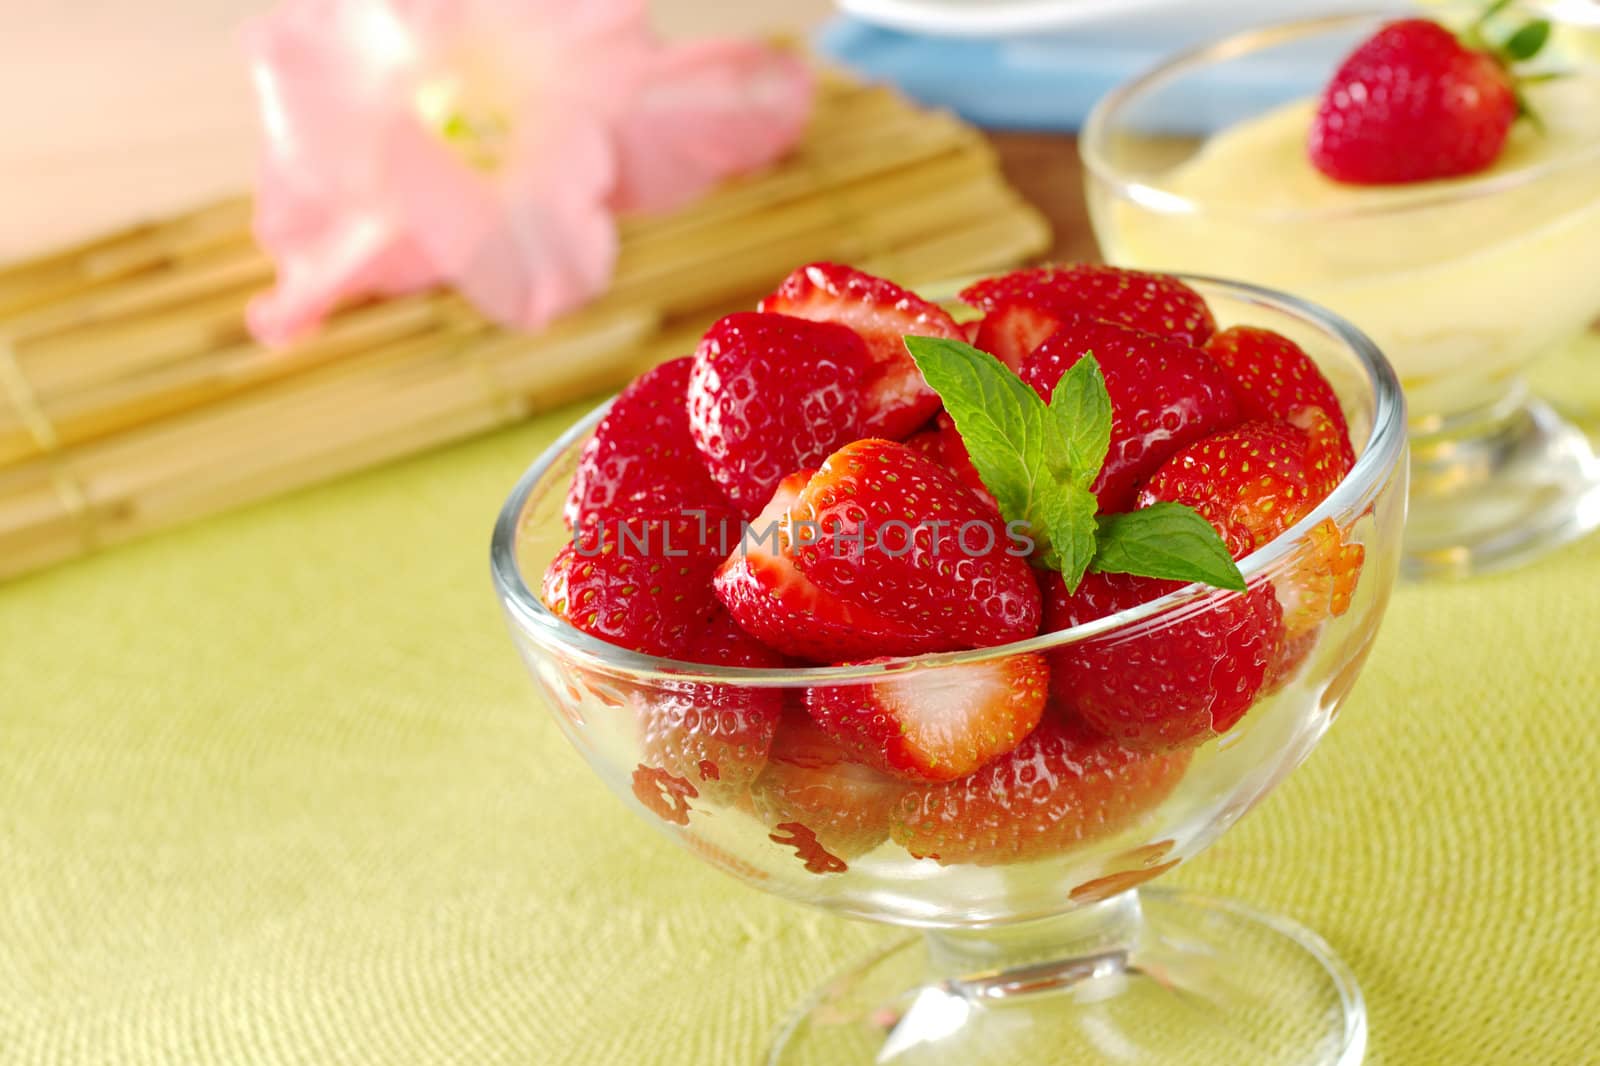 Strawberries with Mint Leaf by ildi